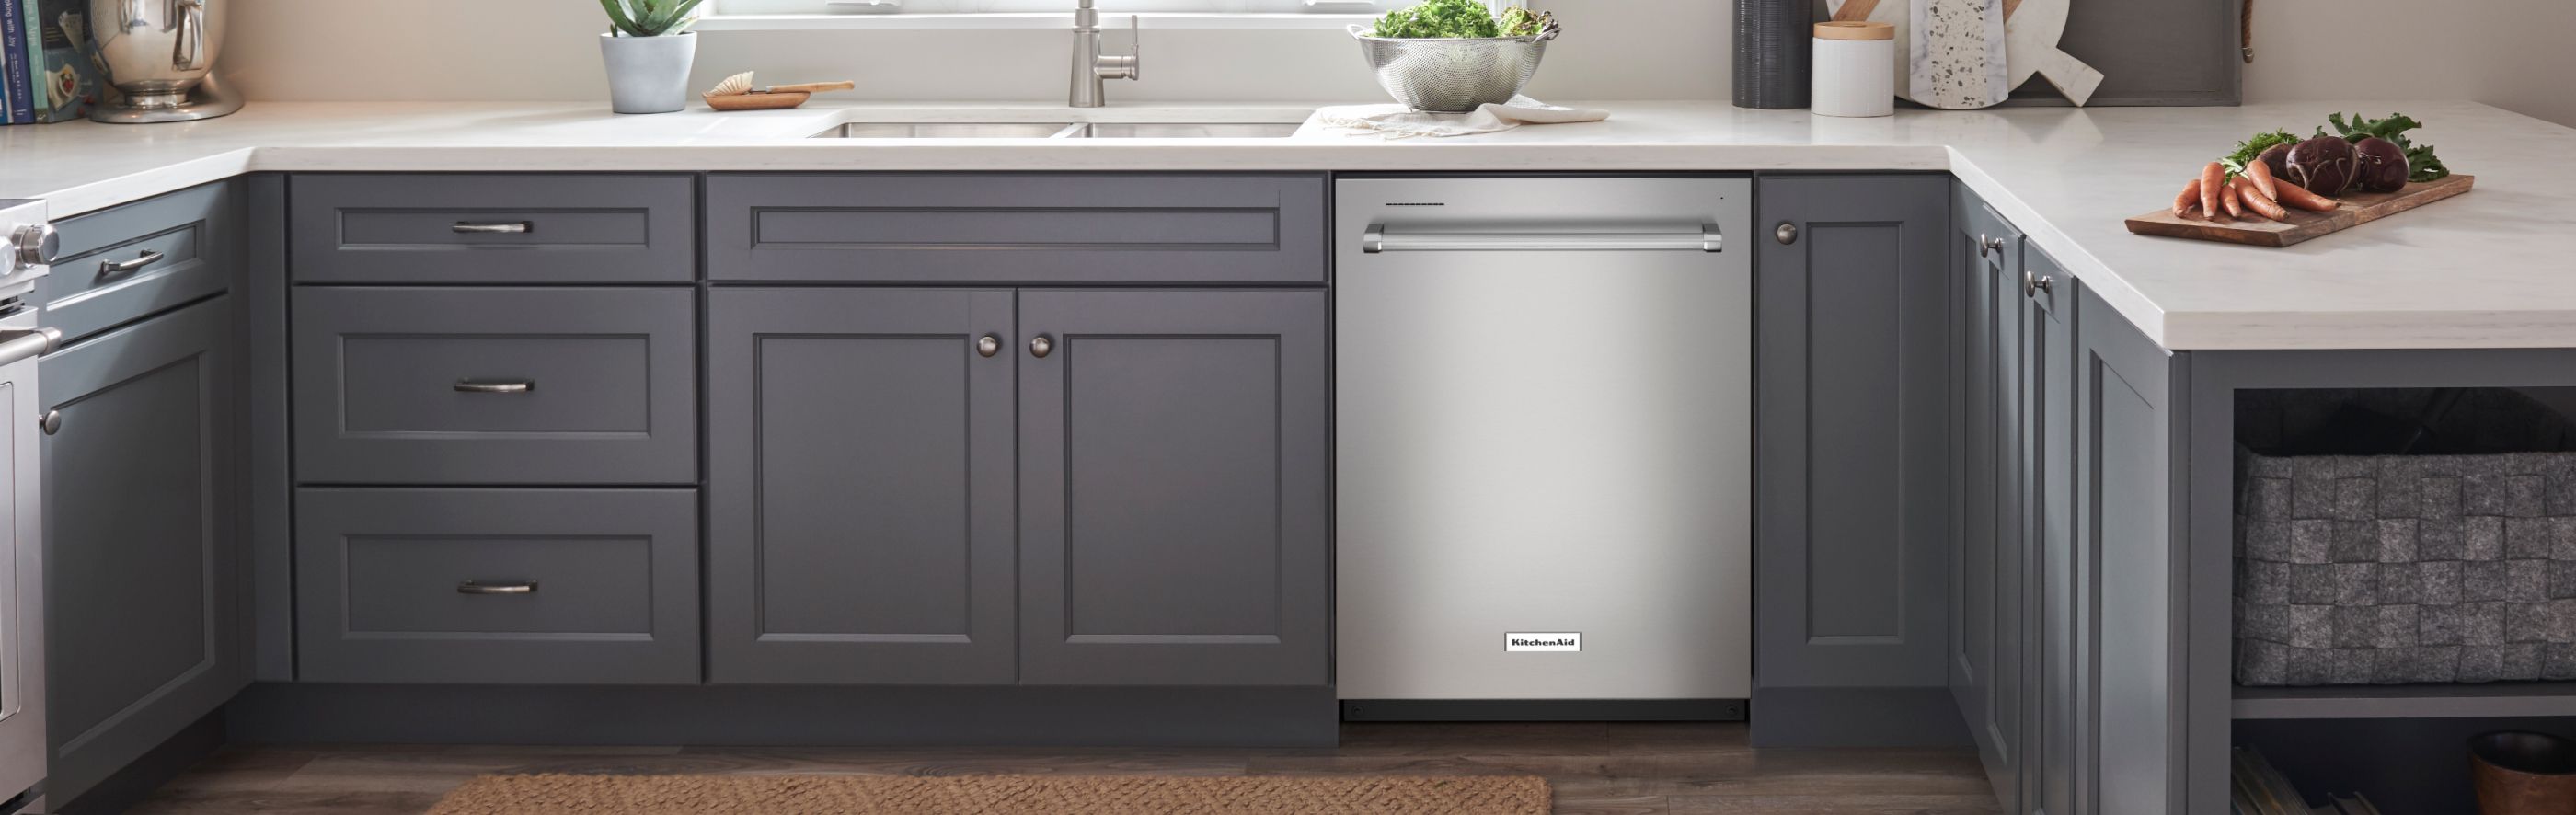 Silver KitchenAid® dishwasher in dark gray cabinetry.